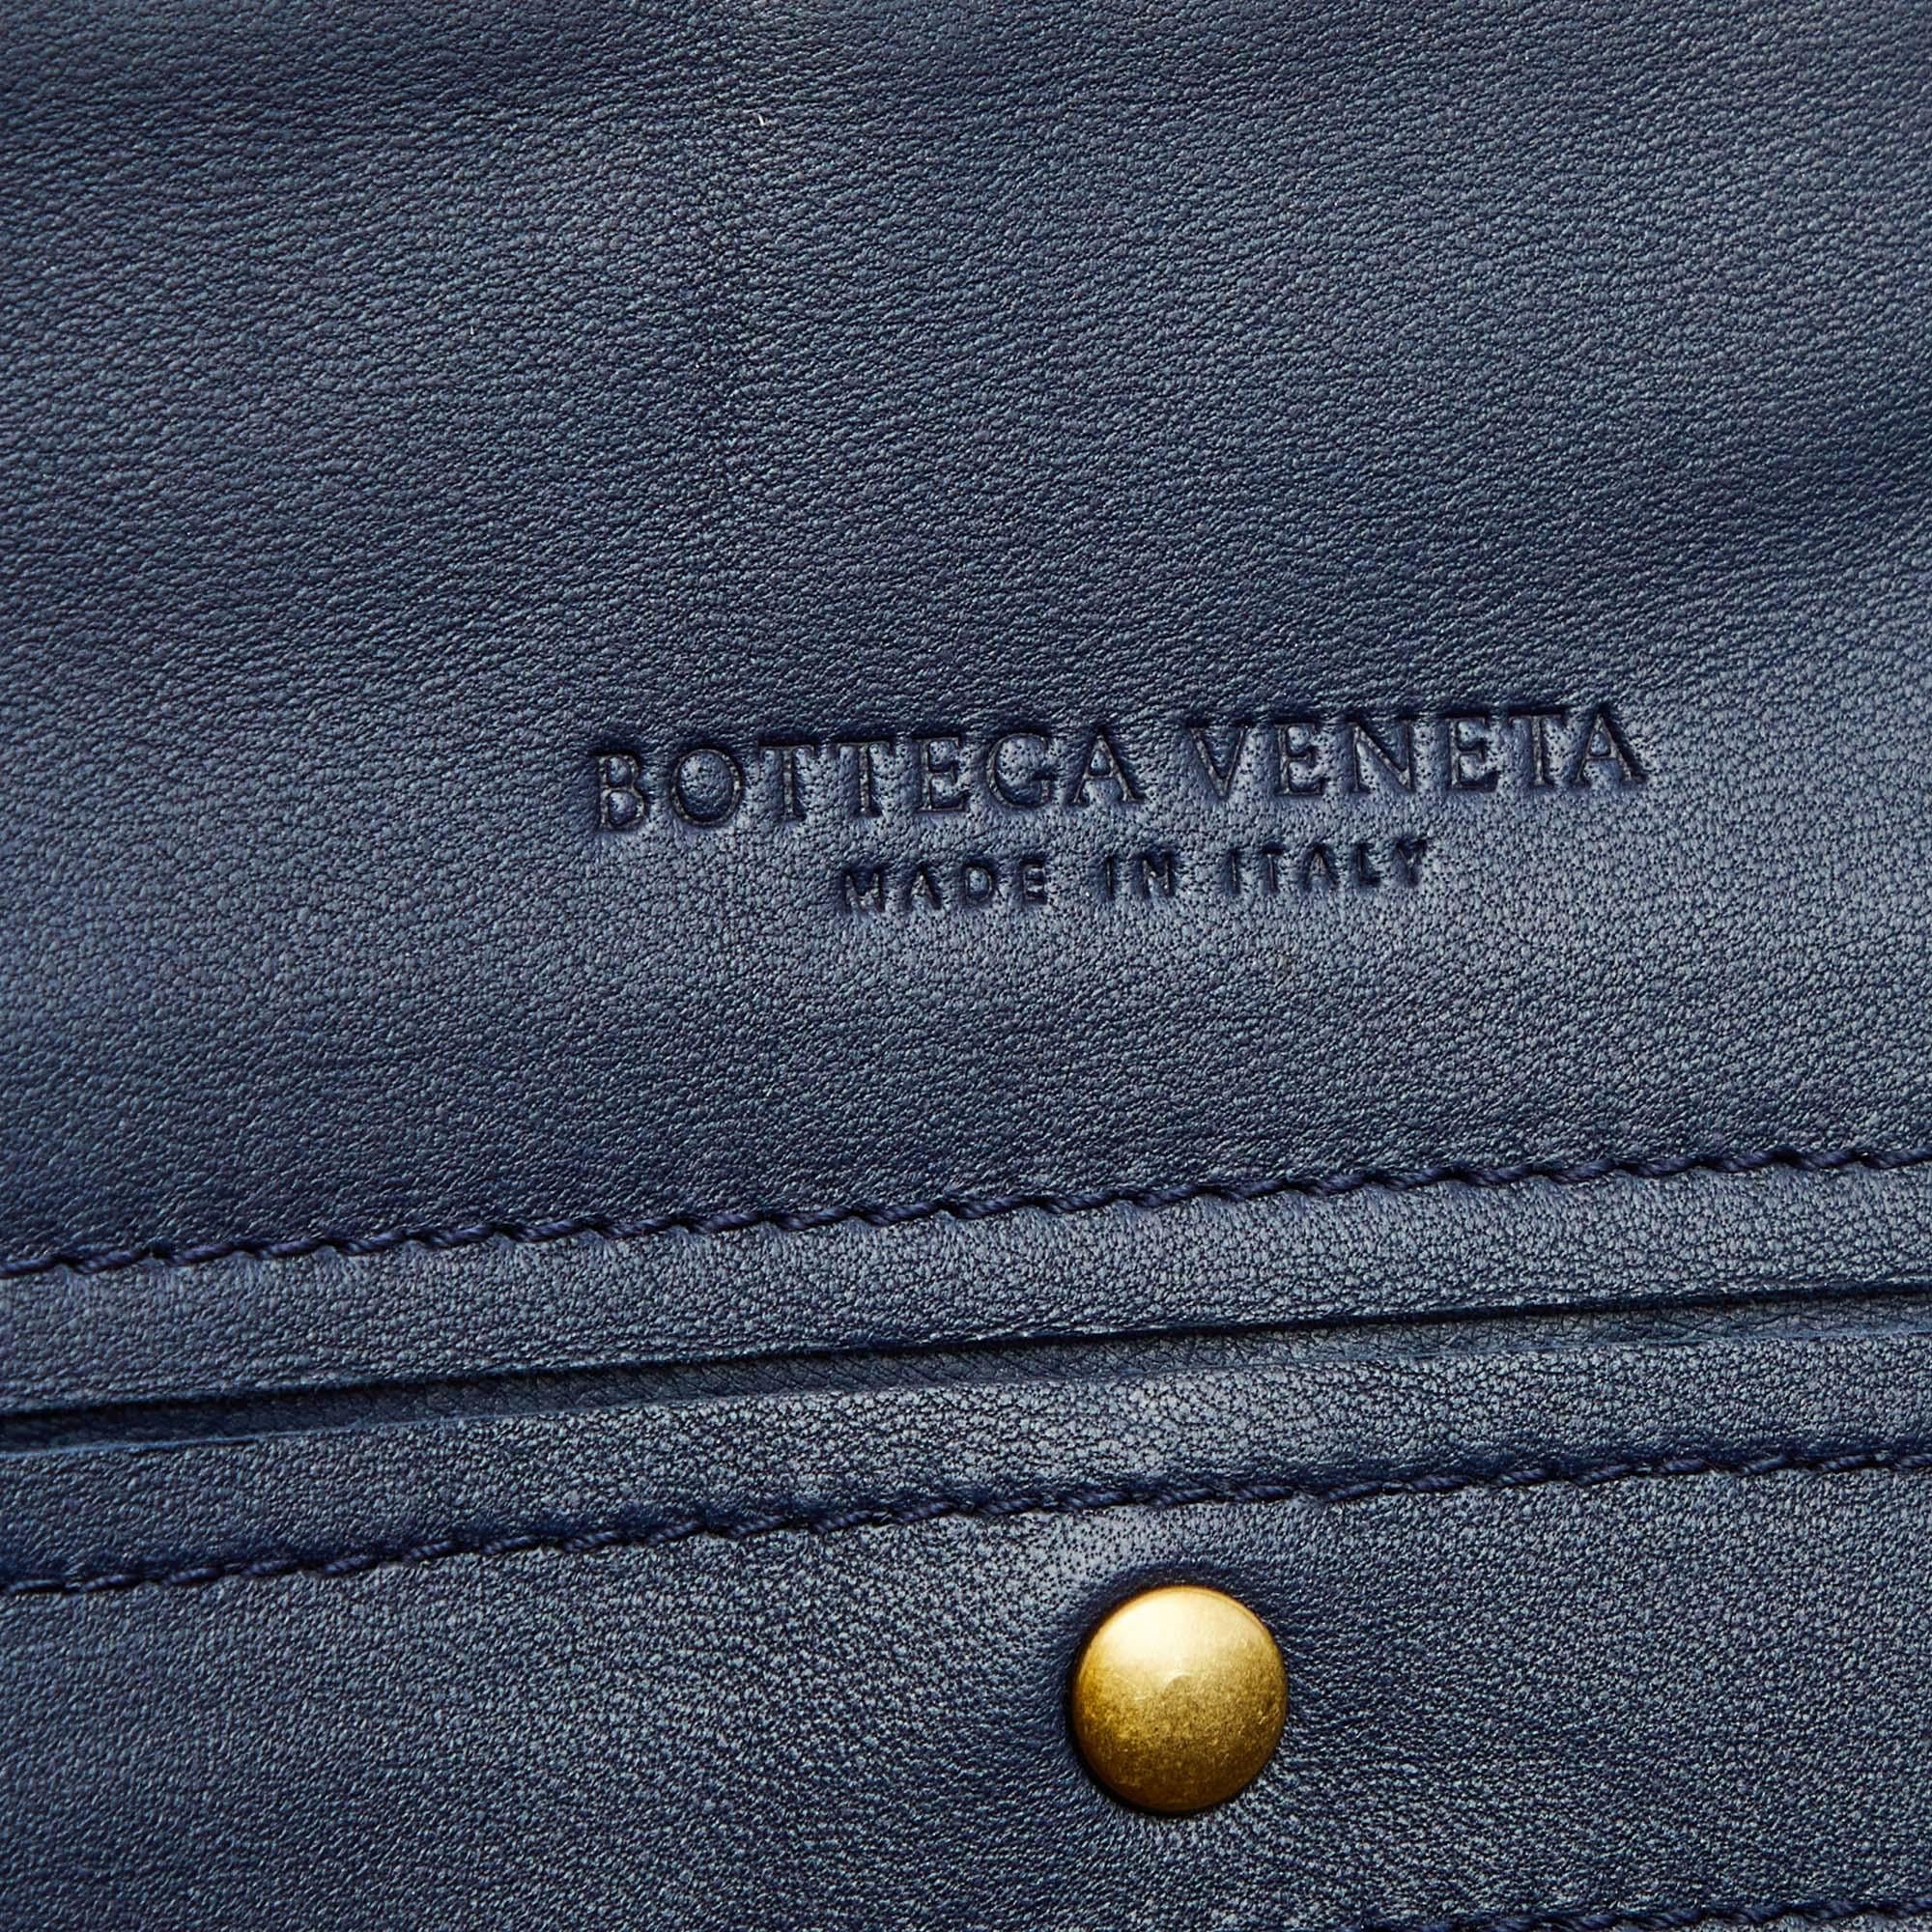 Bottega Veneta Blue/Tan Intrecciato Leather Shopper Tote 2